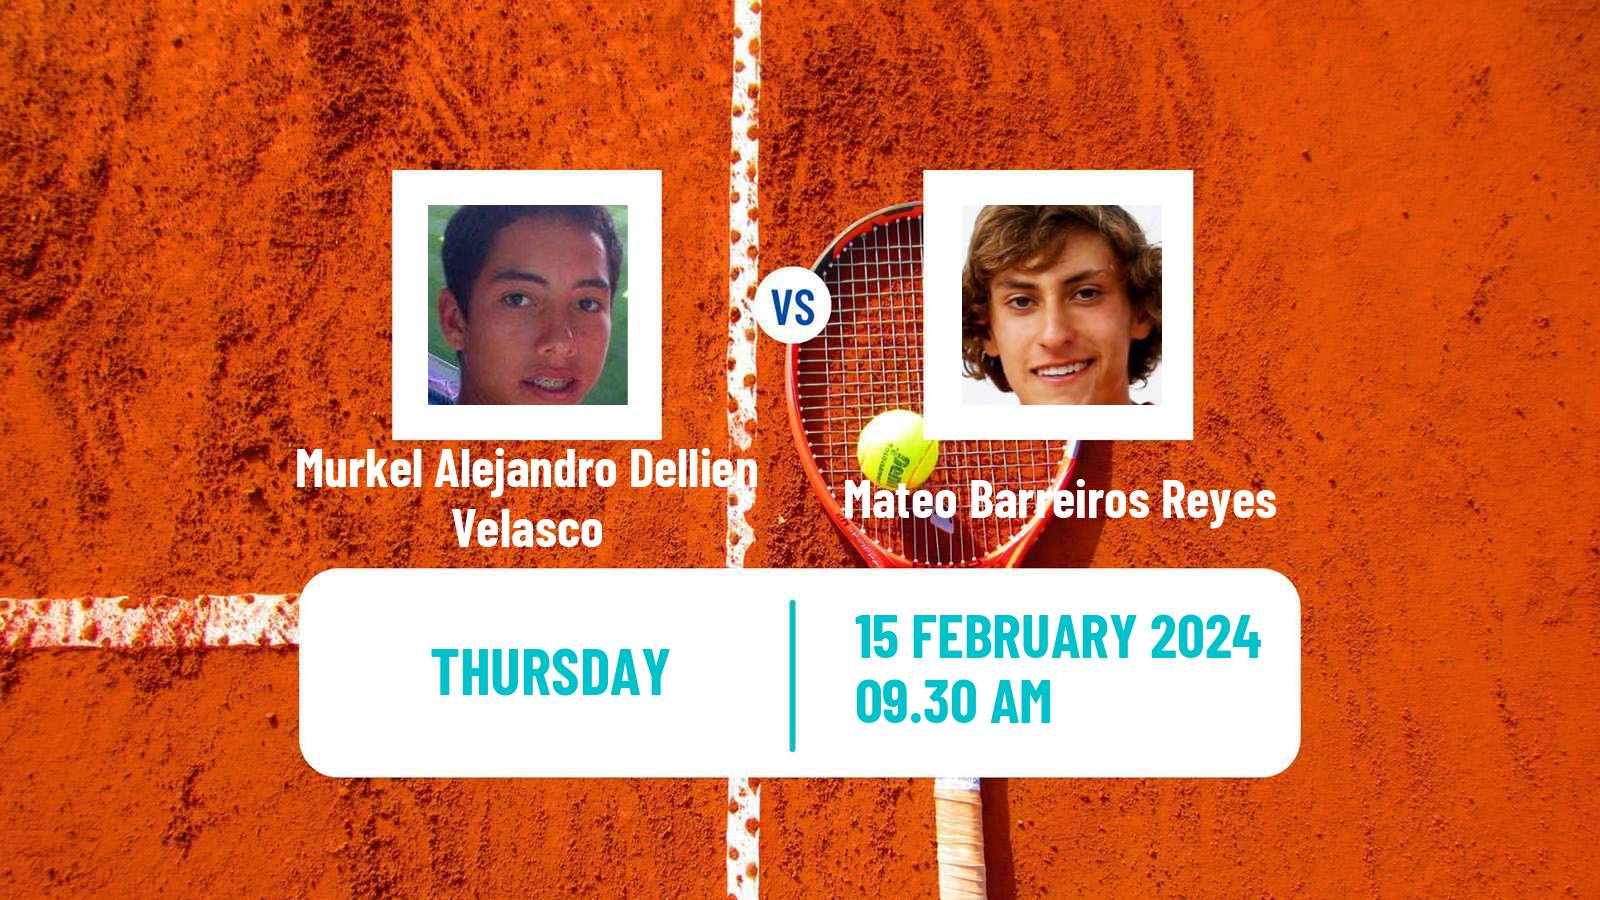 Tennis ITF M25 Punta Del Este 2 Men Murkel Alejandro Dellien Velasco - Mateo Barreiros Reyes